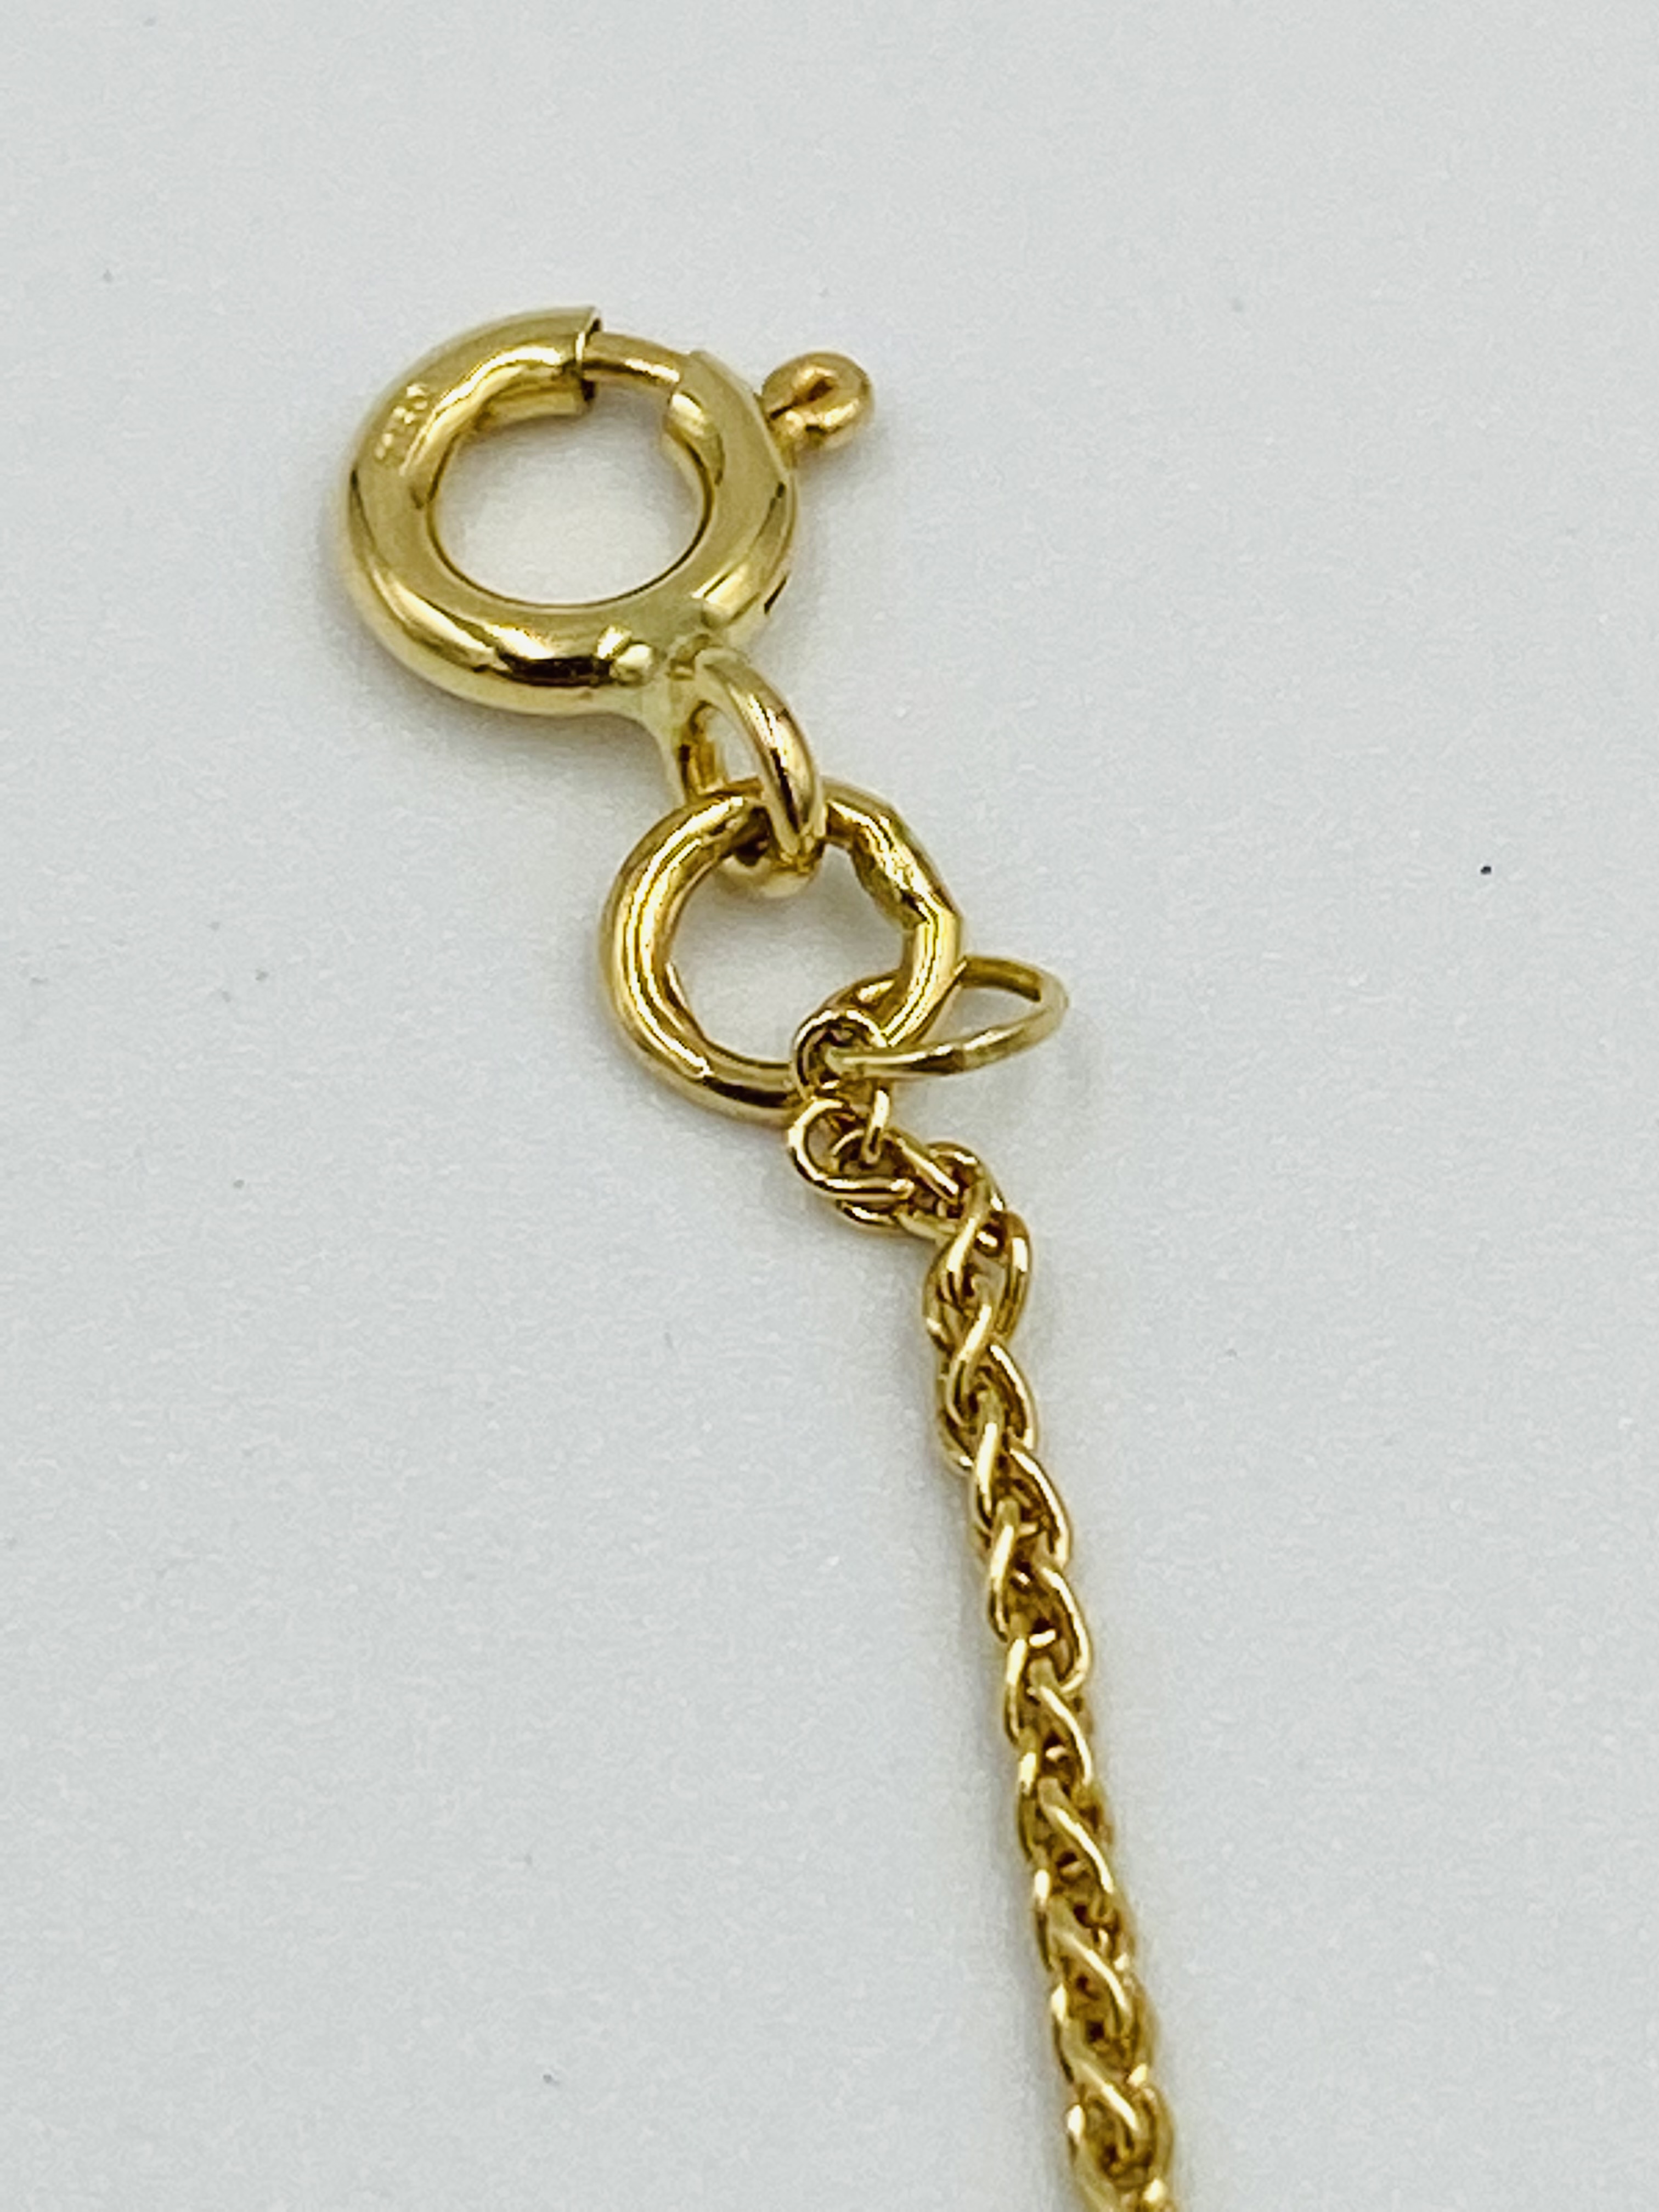 18ct gold fine chain - Image 2 of 4